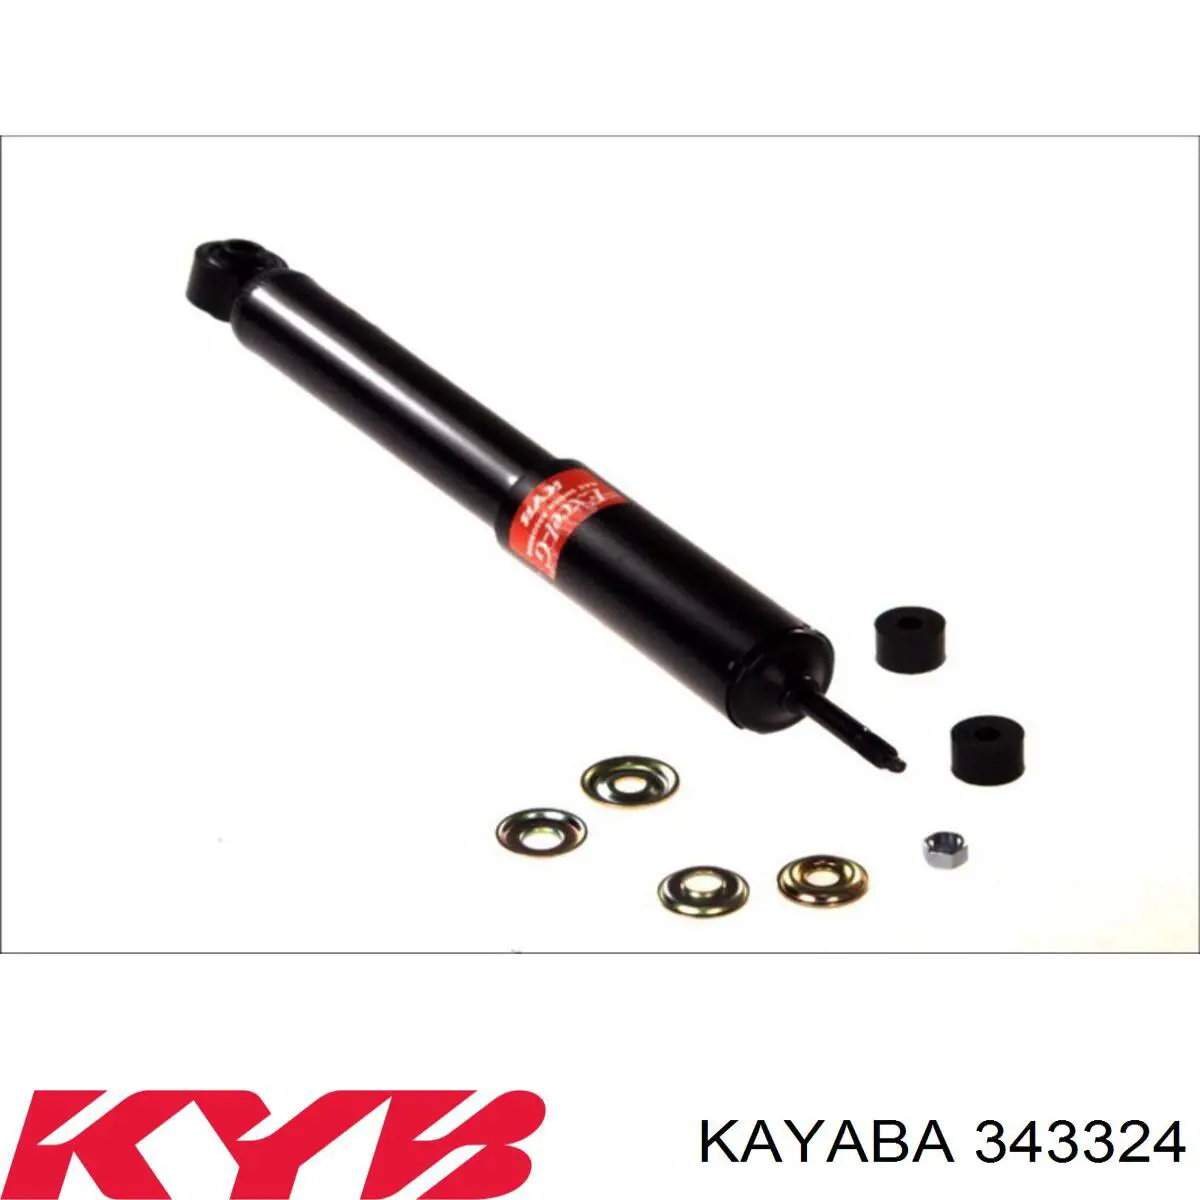 343324 Kayaba амортизатор передний